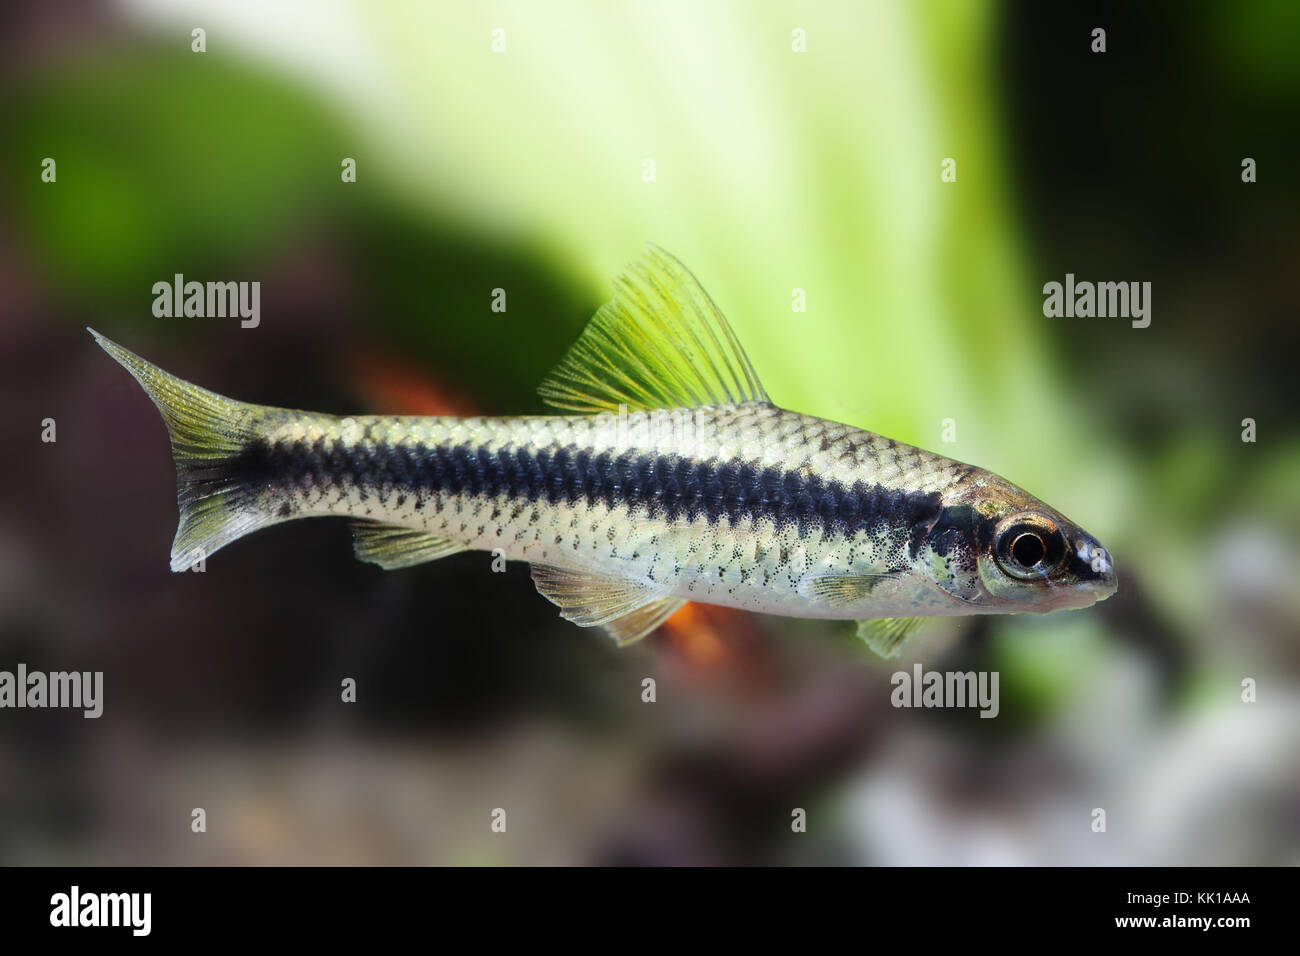 Crossocheilus siamensis Sae algae eater fish, freshwater tank landscape, close-up photo, selective focus Stock Photo